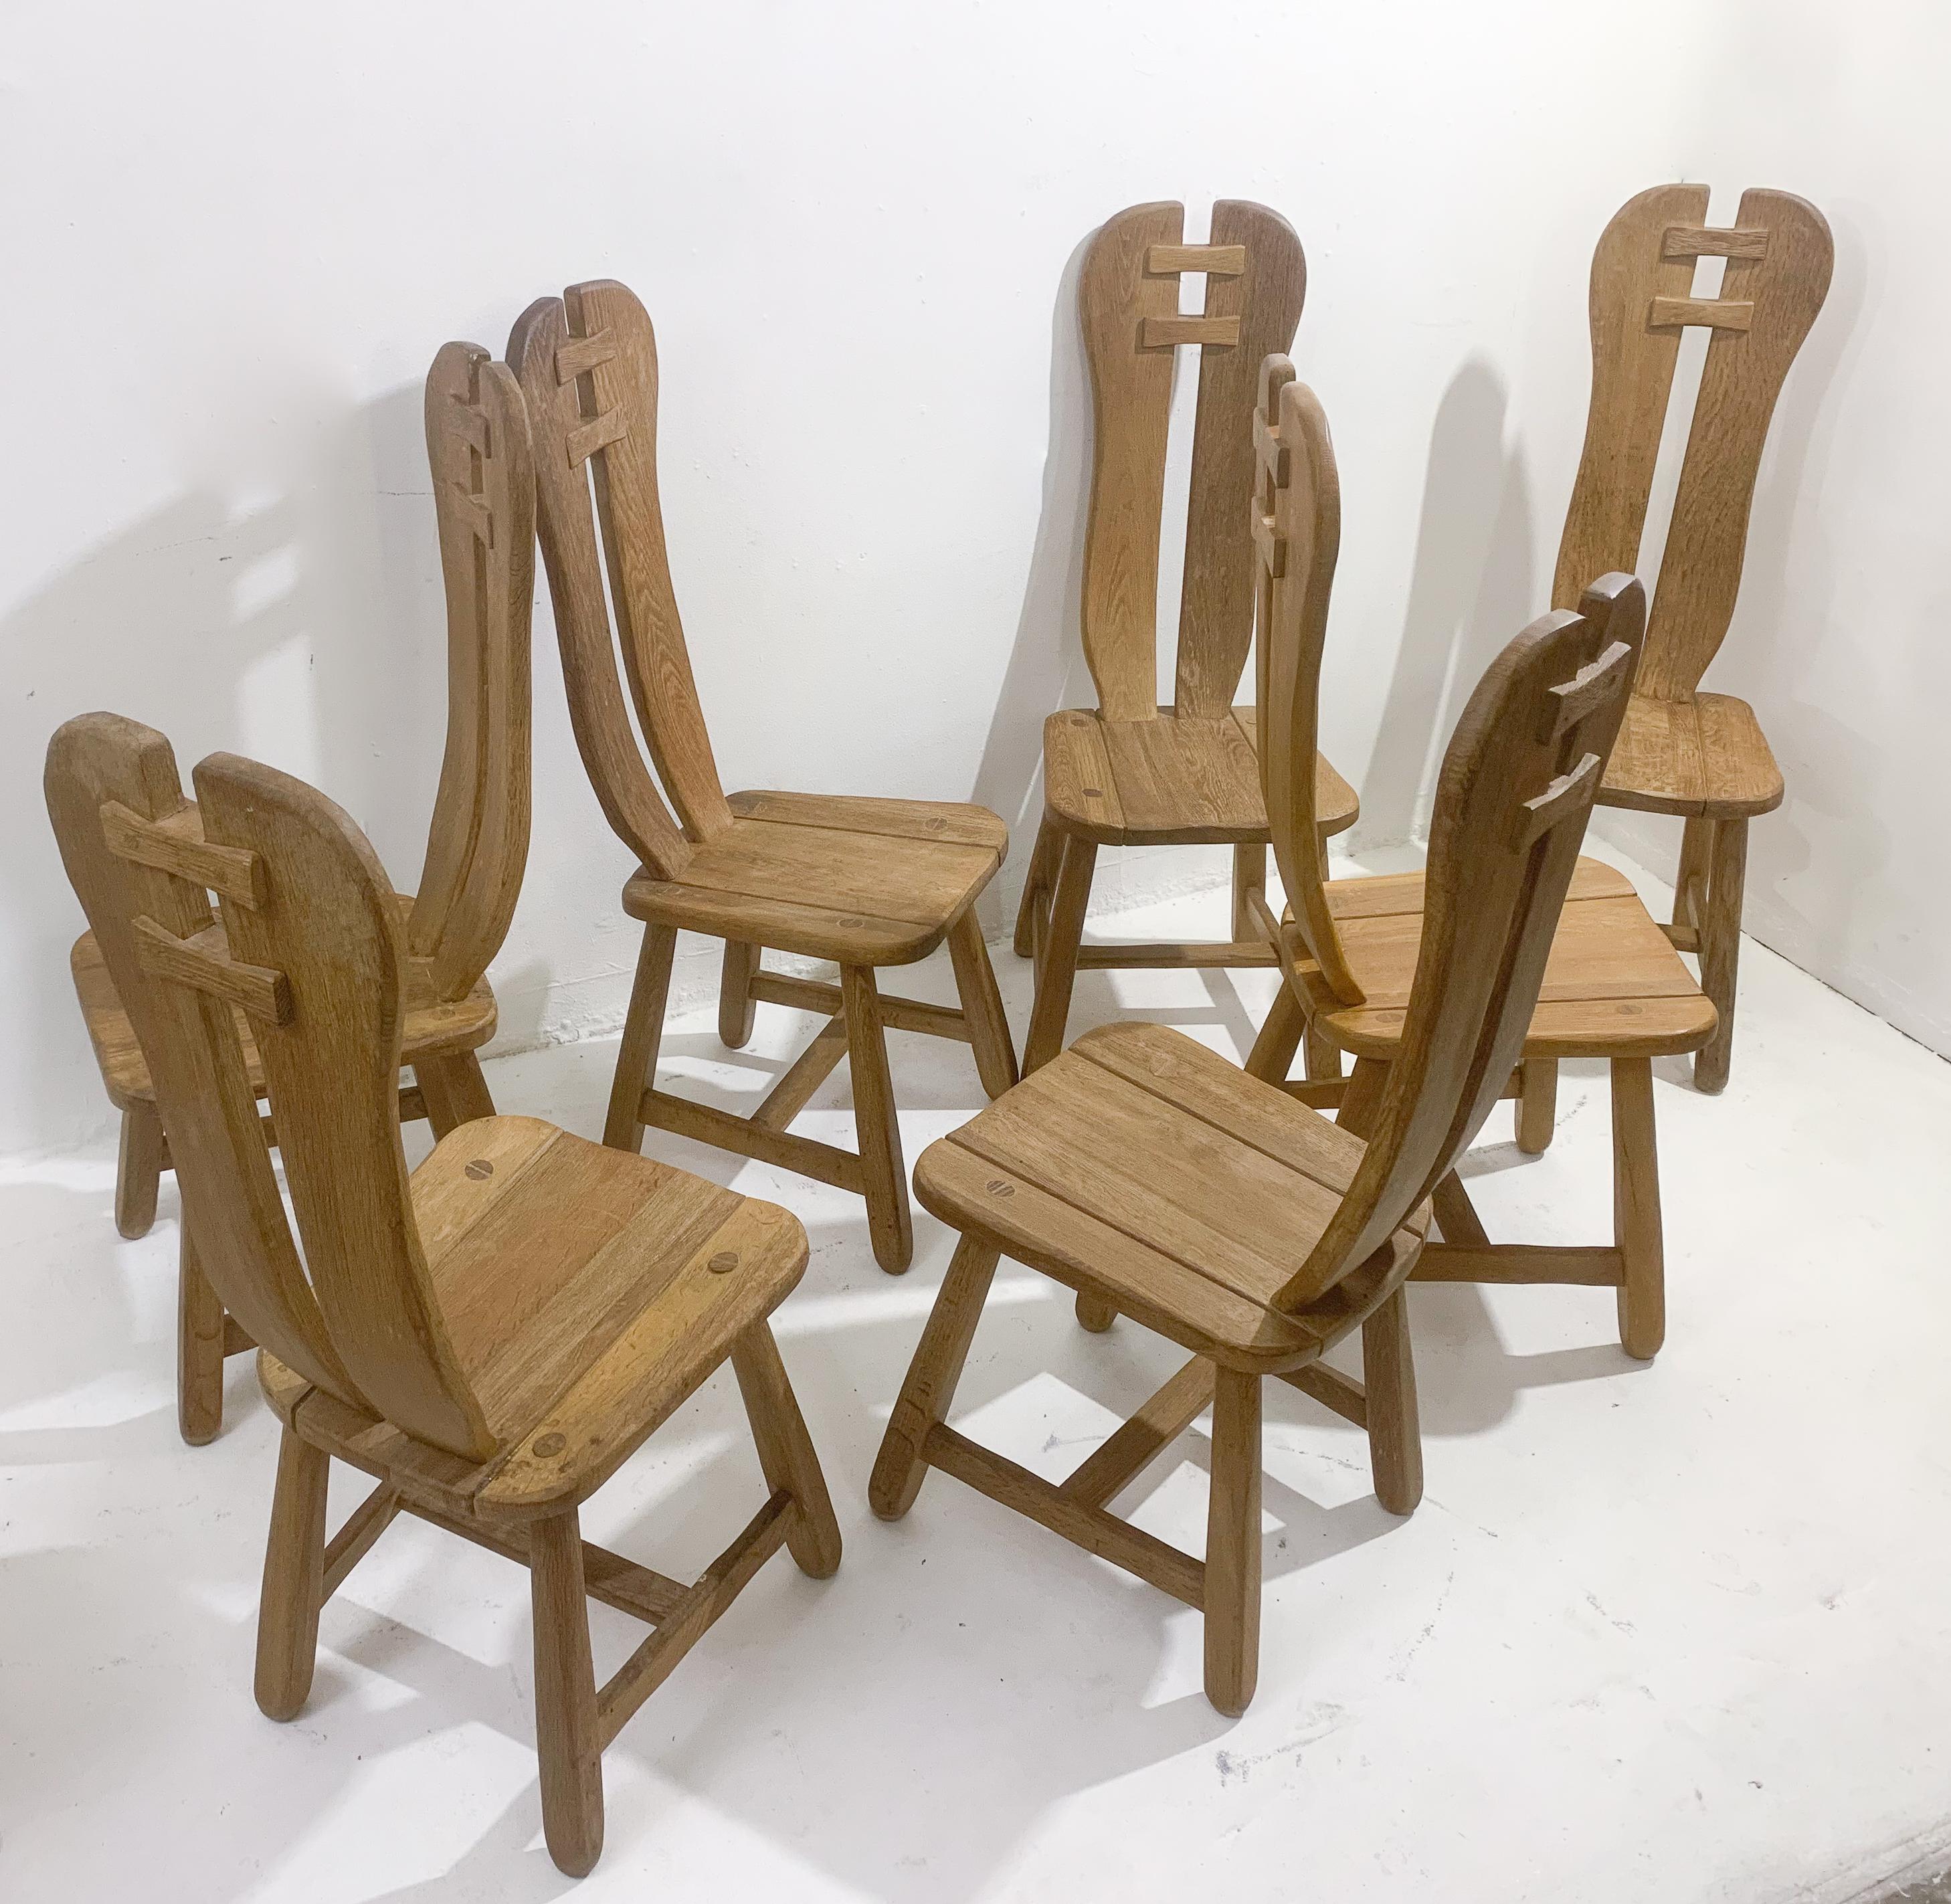 Mid-Century Modern set of 7 brutalist chairs, oak by De Puydt, Belgium.